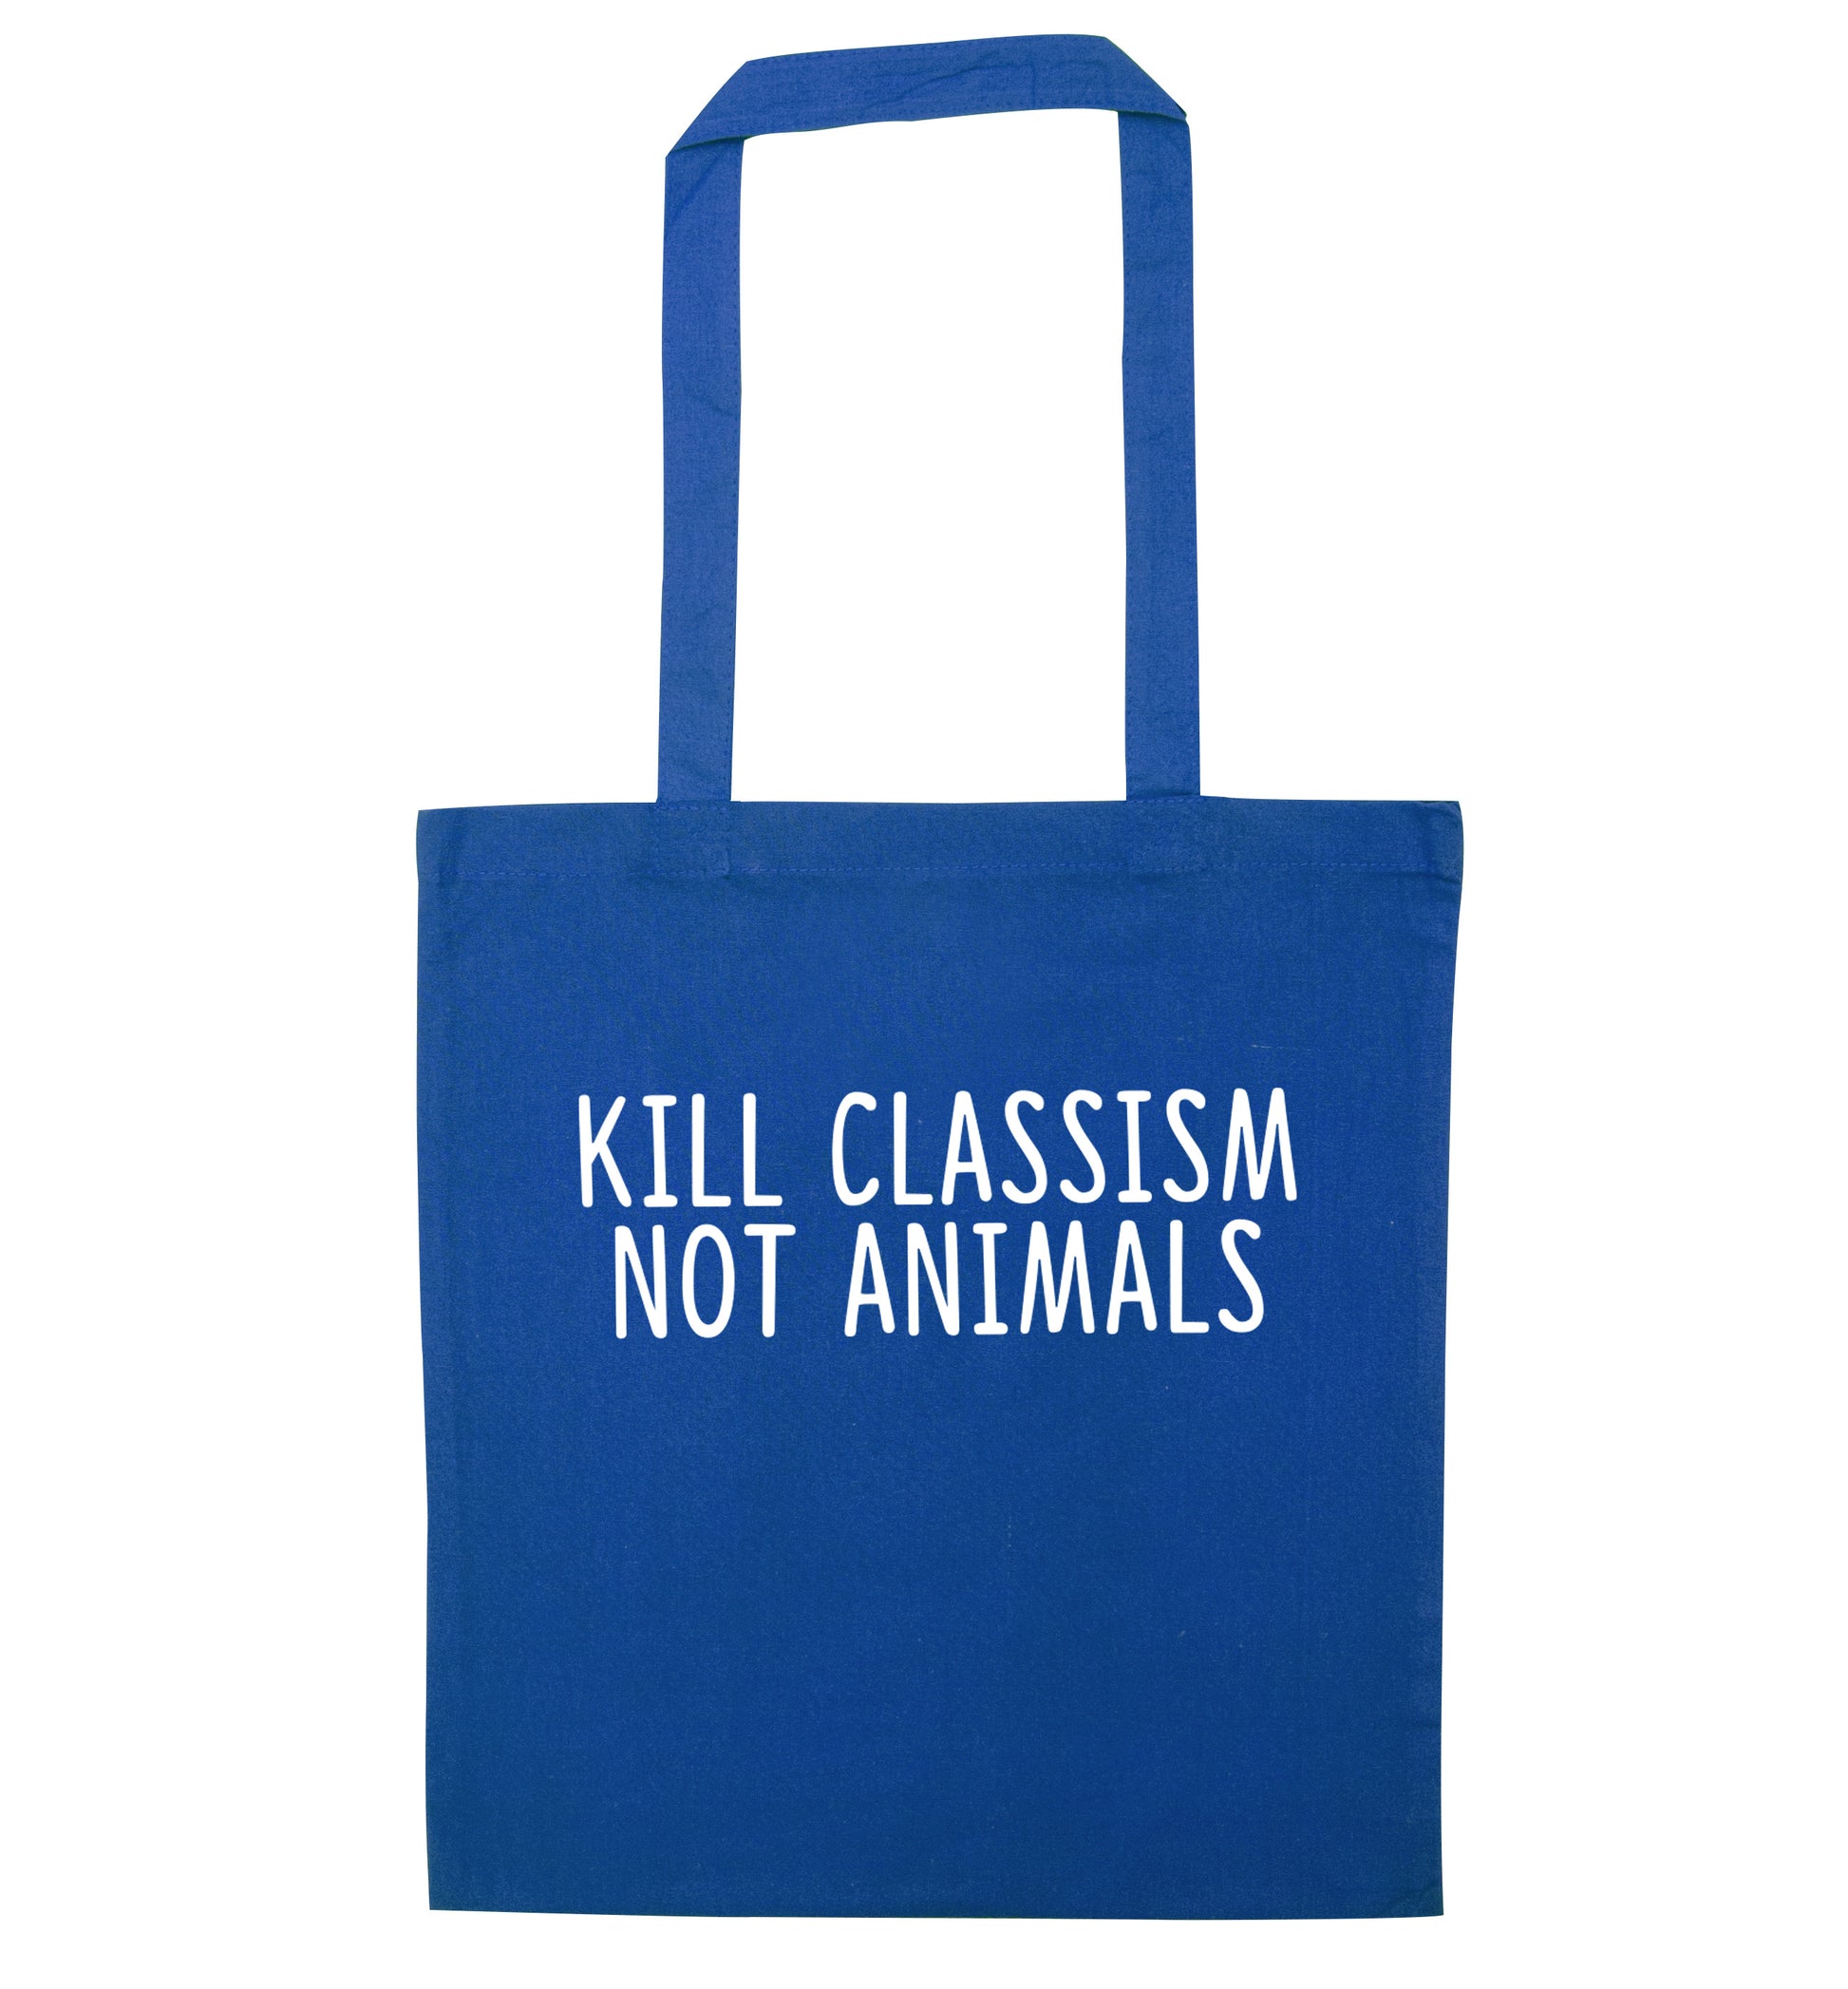 Kill Classism Not Animals blue tote bag